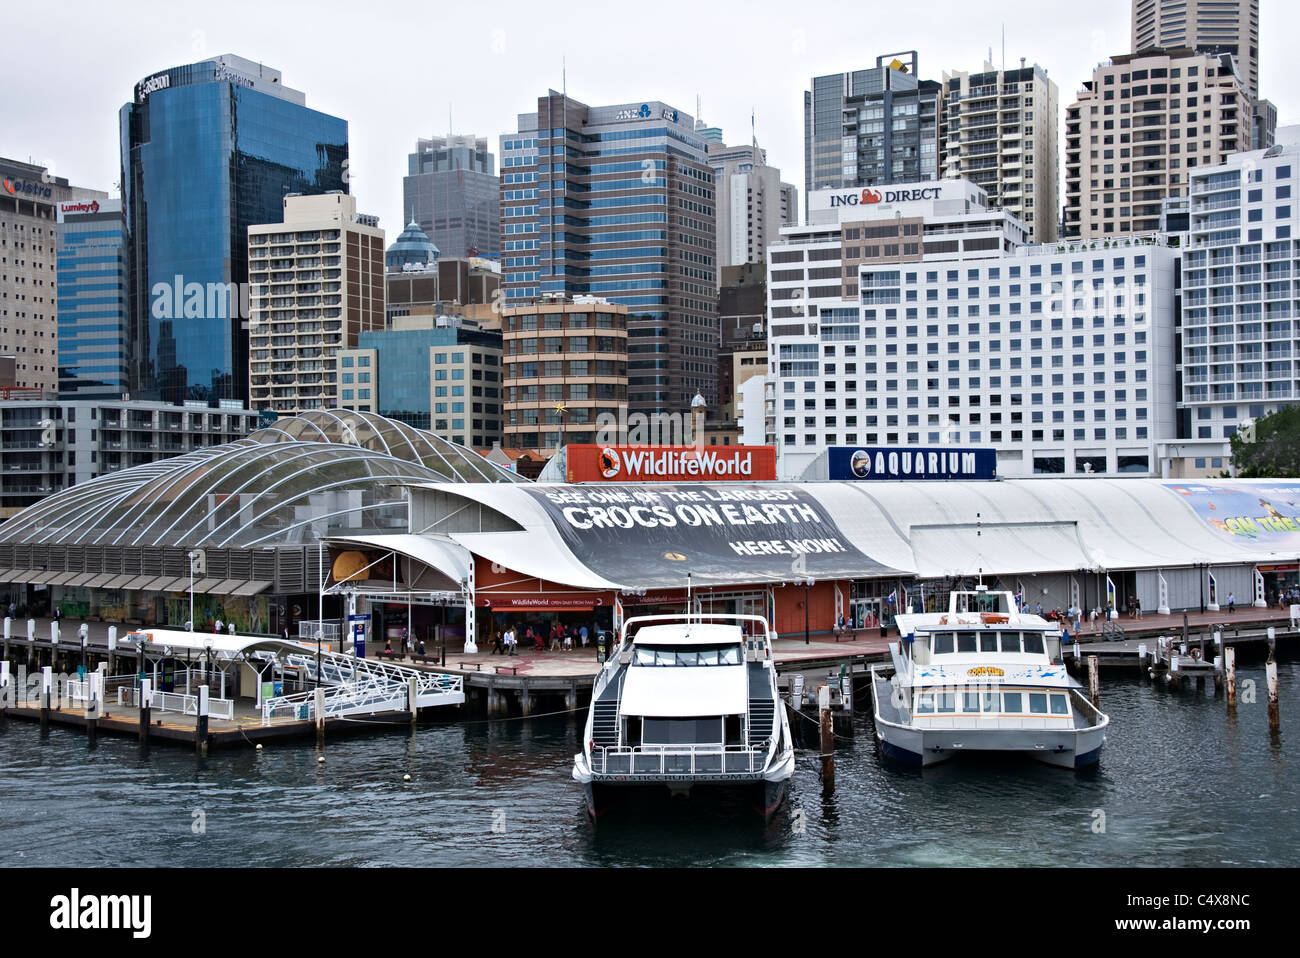 Über Cockle Bay Wildlife World und Sydney Aquarium Harbour Cruise Boote am Darling Harbour, New South Wales Australien Stockfoto